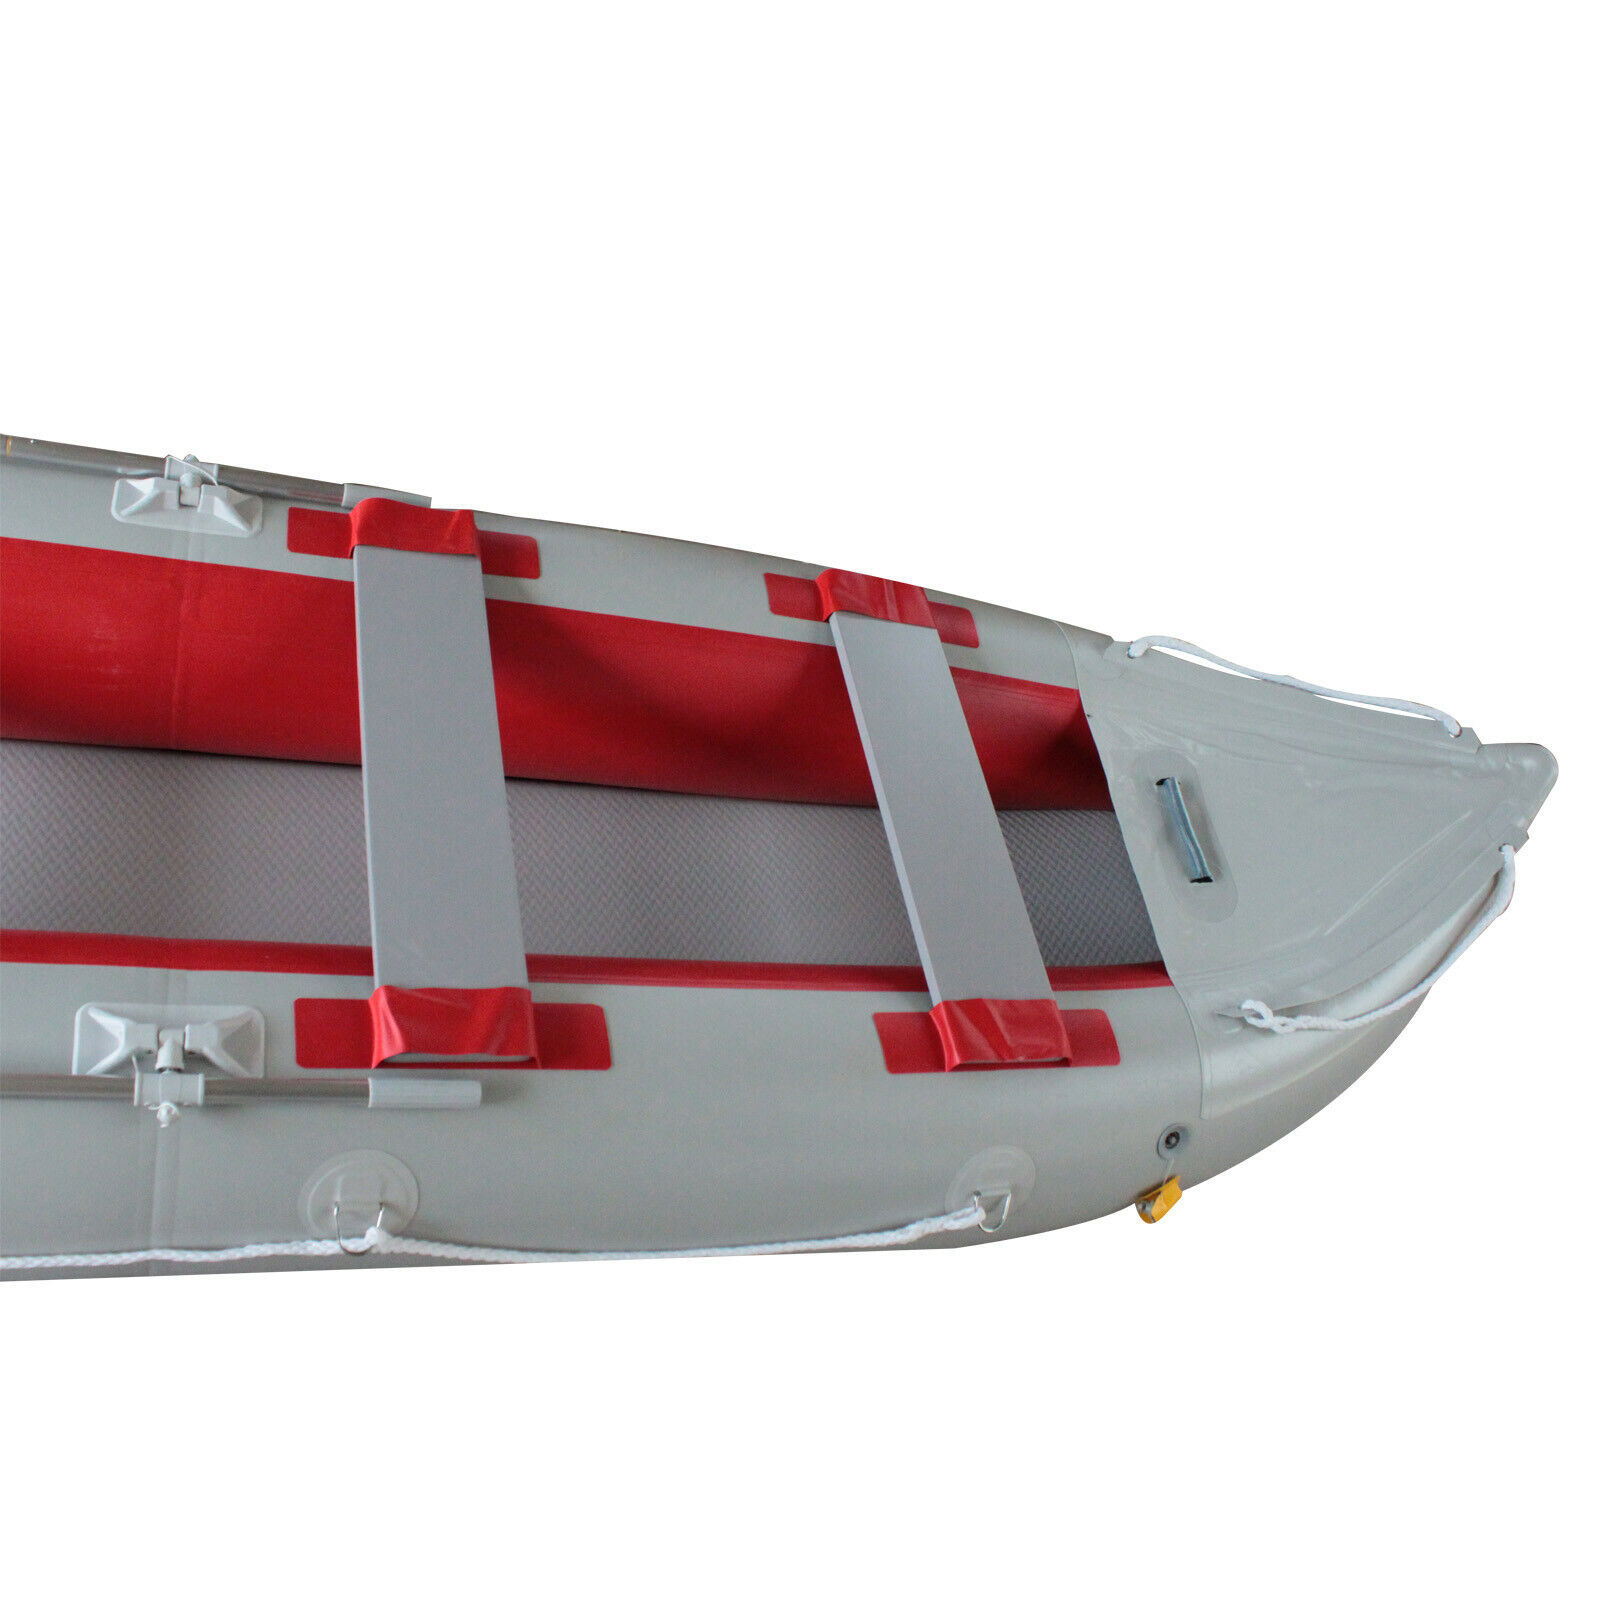 BRIS 14.1Ft Inflatable Kayak Fishing Tender Inflatable Pontoon